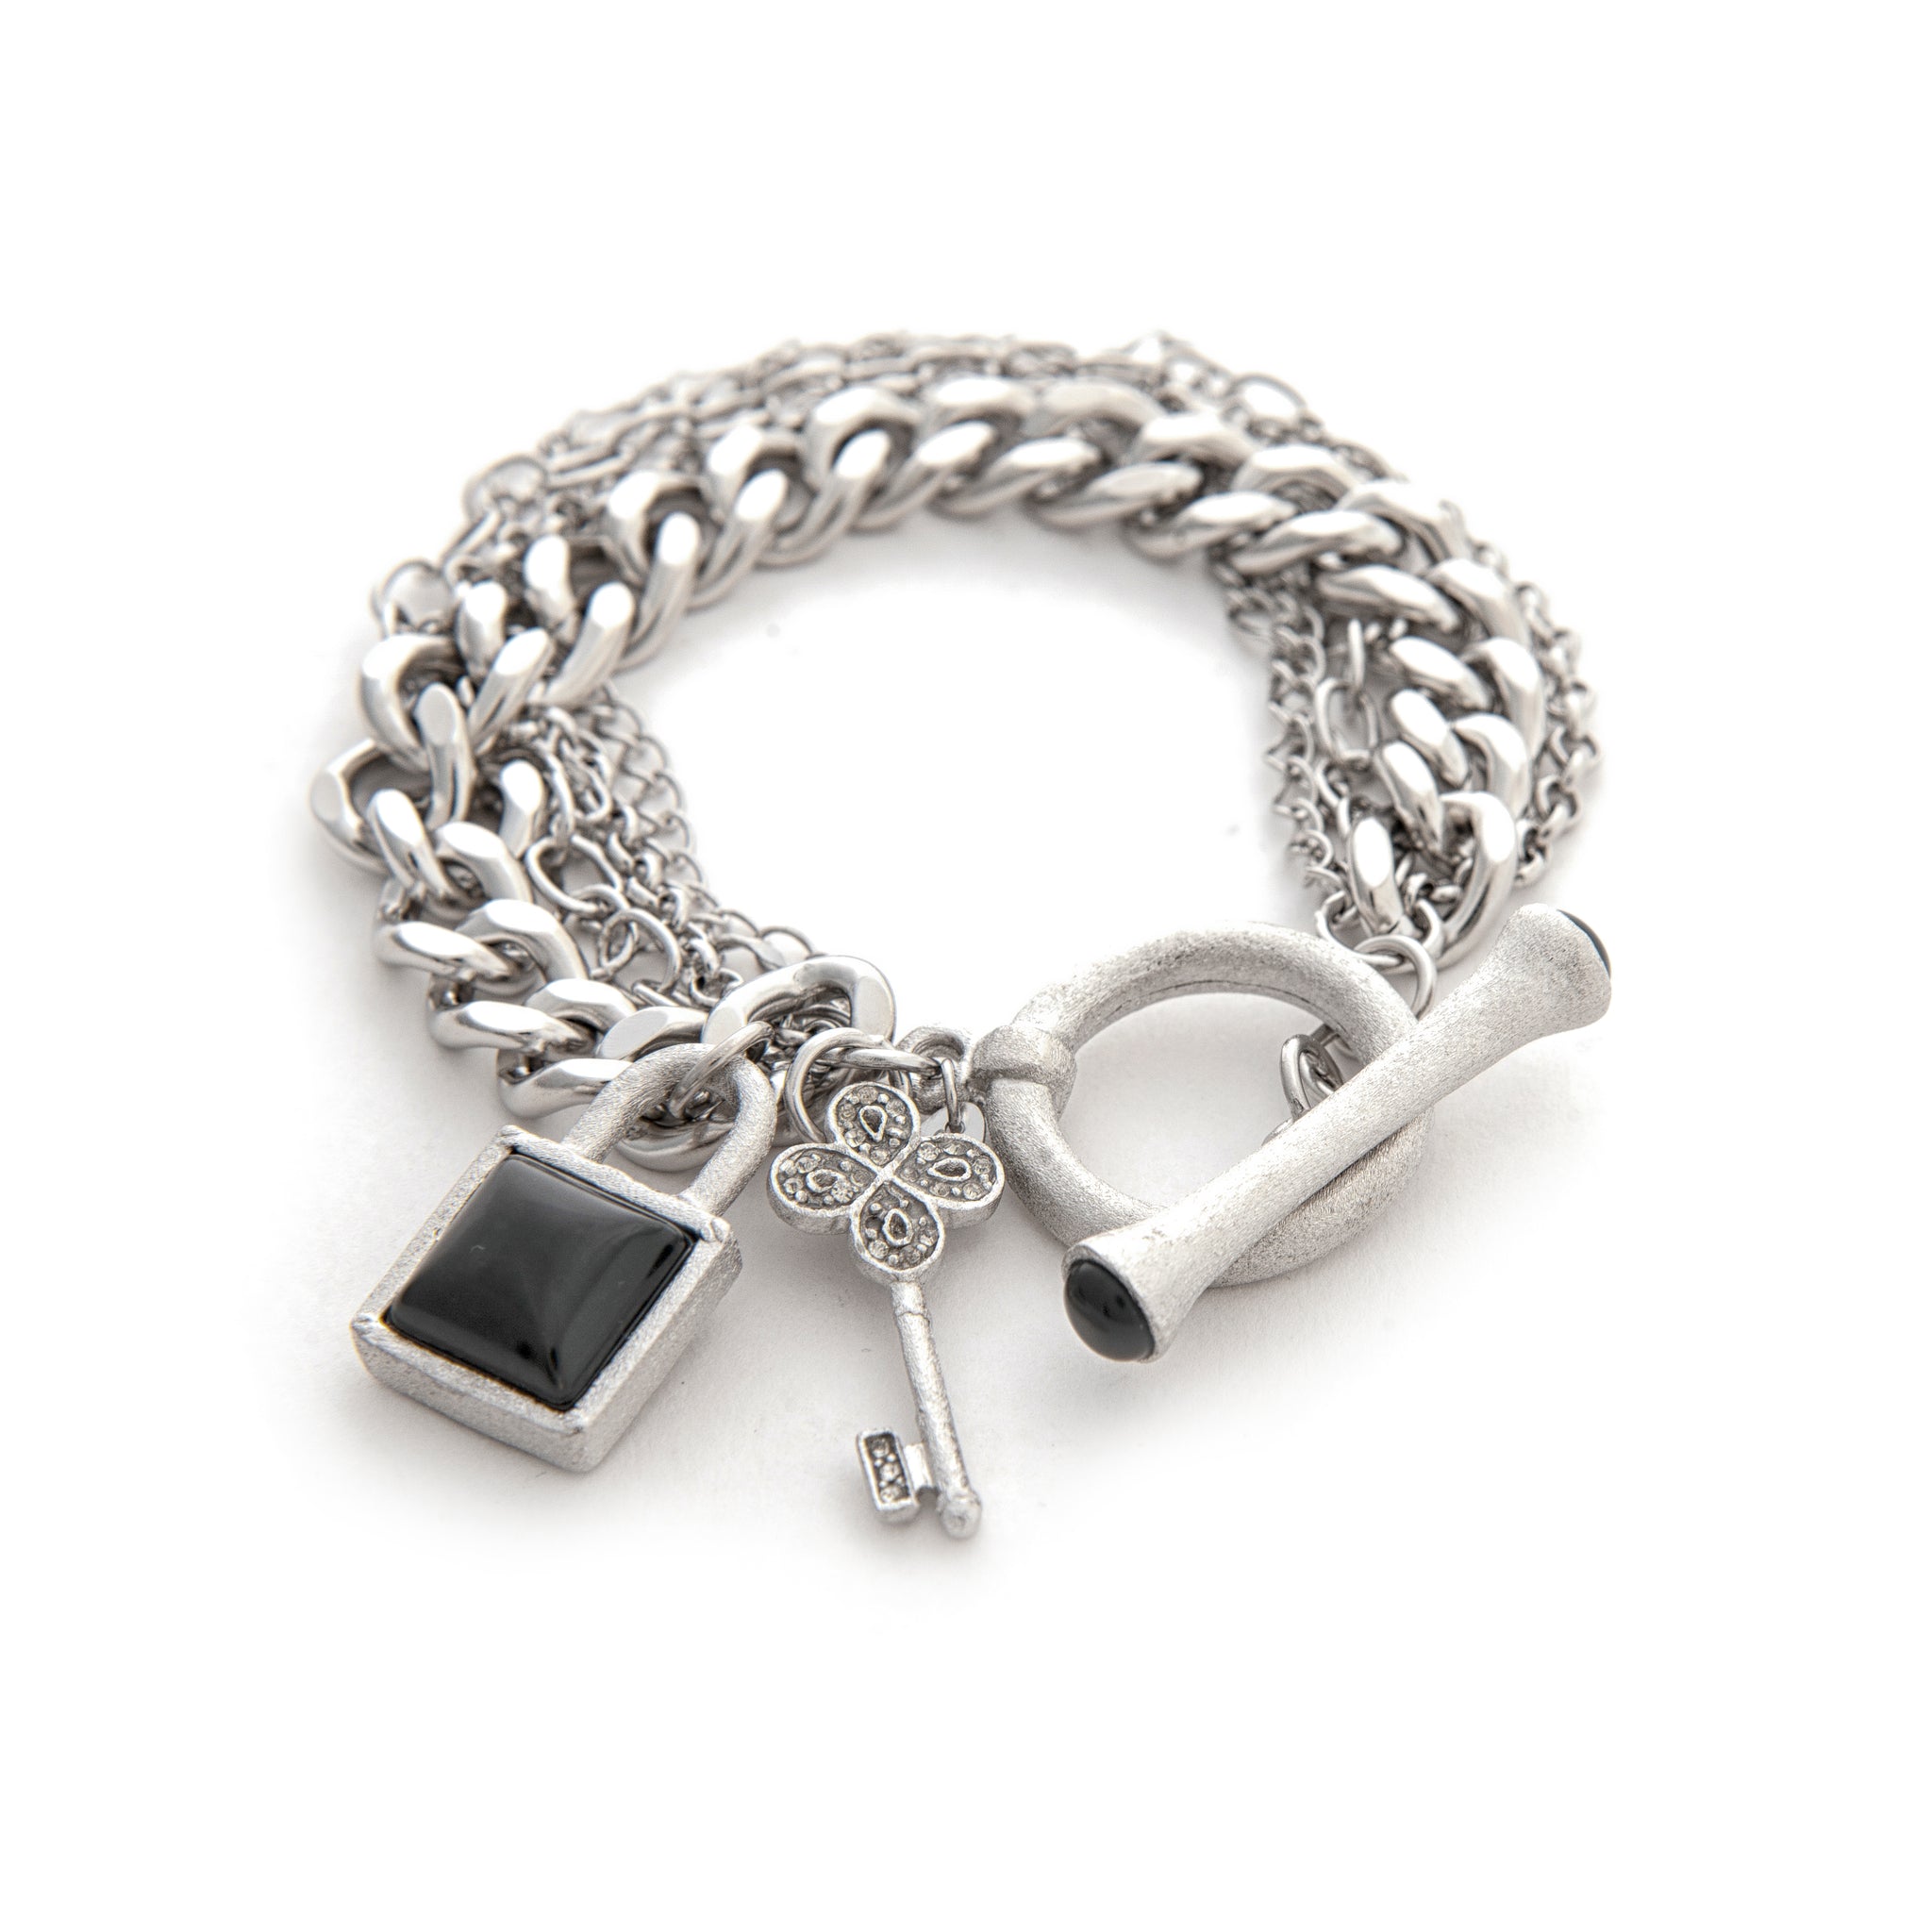 Multi Chain White Rhodium Gem Stone Charm Toggle Bracelet - Closeout